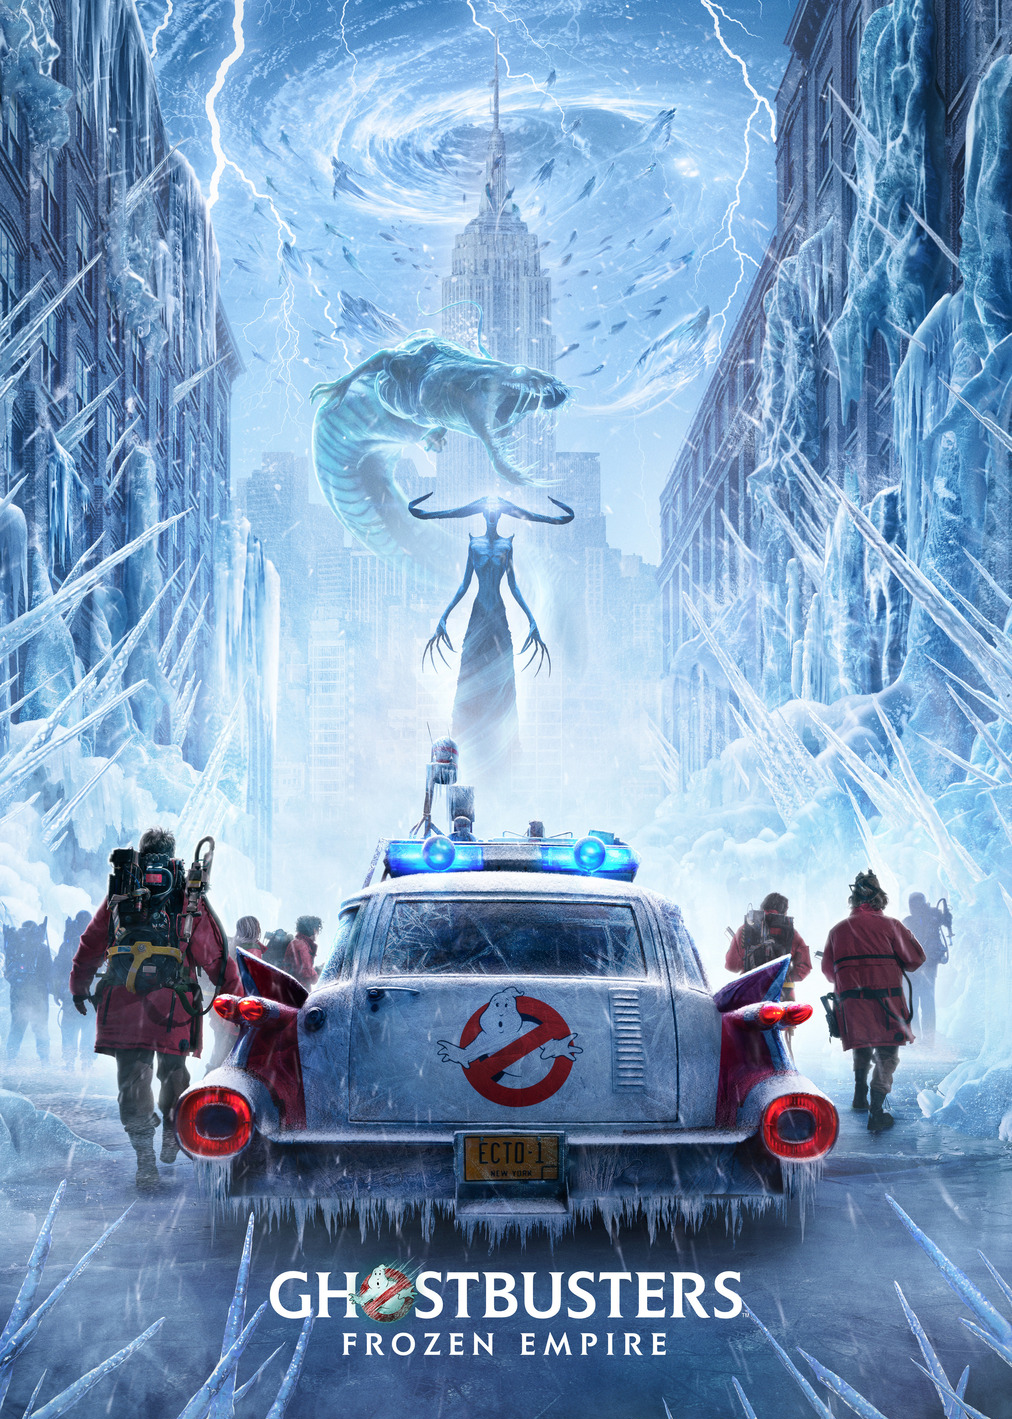 Ghostbusters Frozen Empire